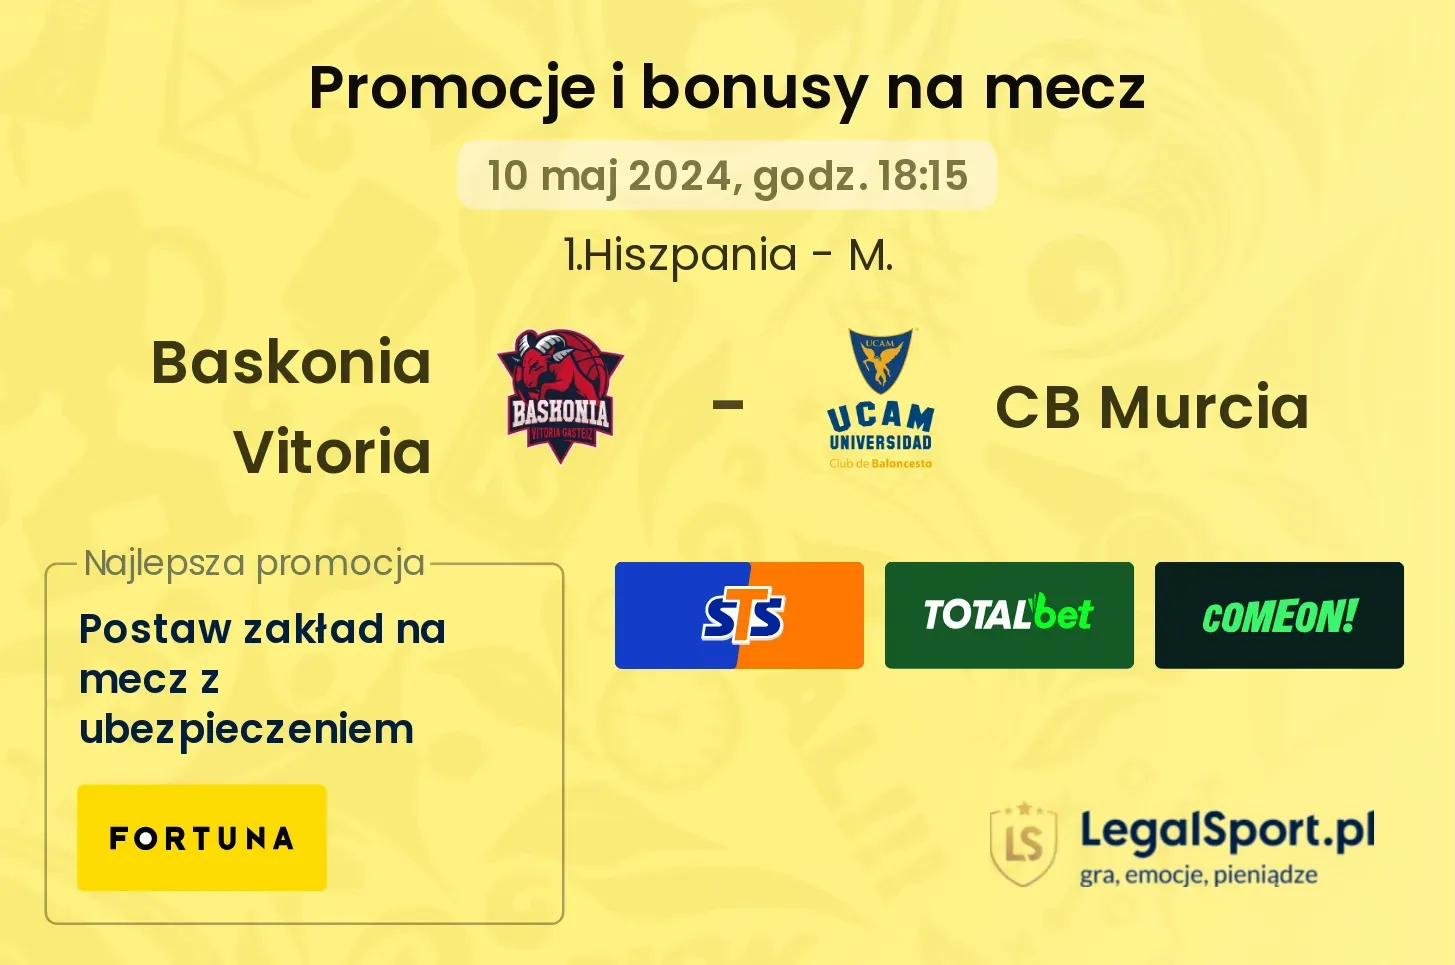 Baskonia Vitoria - CB Murcia promocje bonusy na mecz